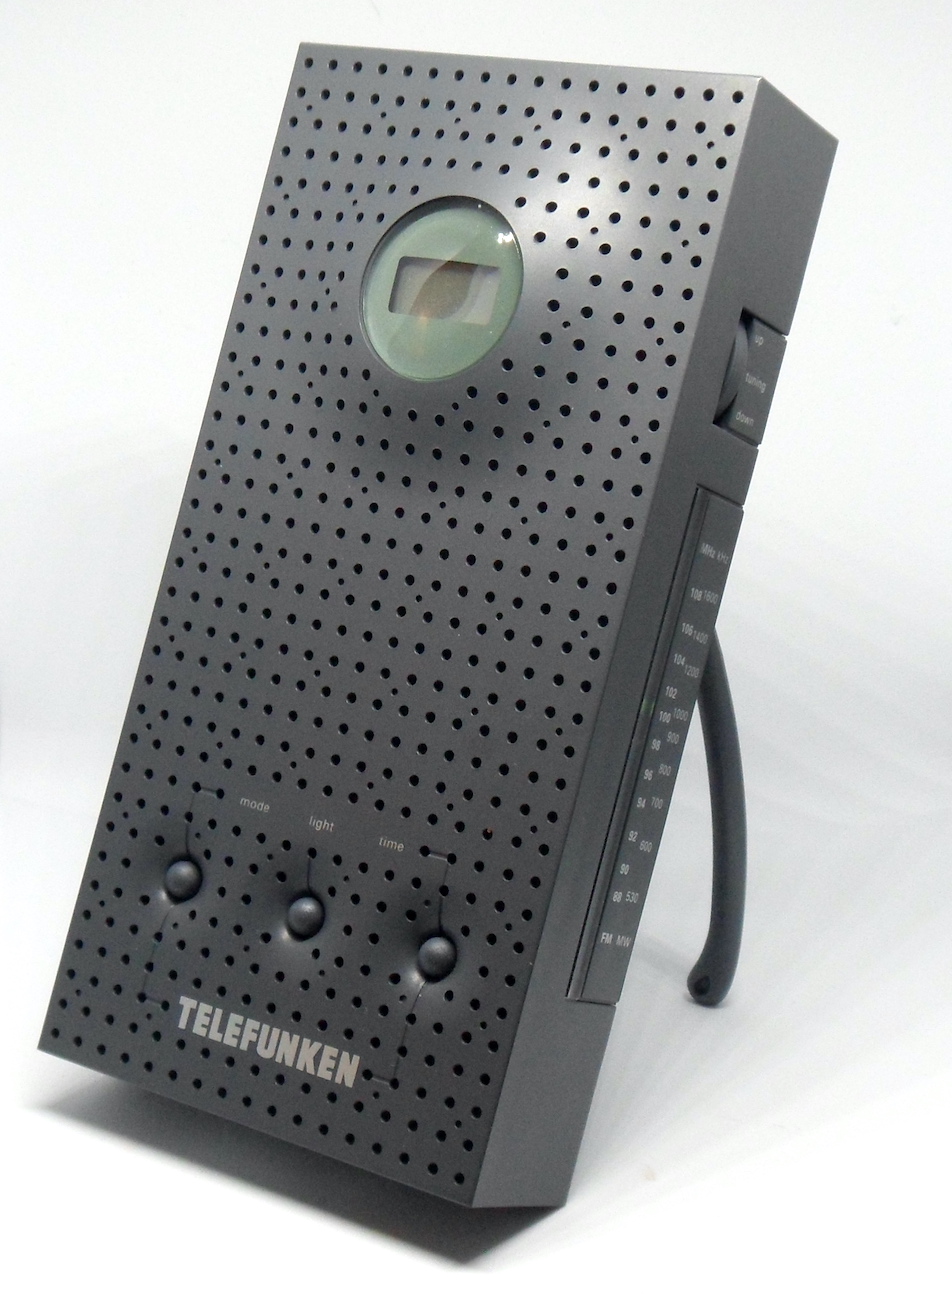 Radio R15 (Thomson) & RT201 (Telefunken) - by Philippe Starck